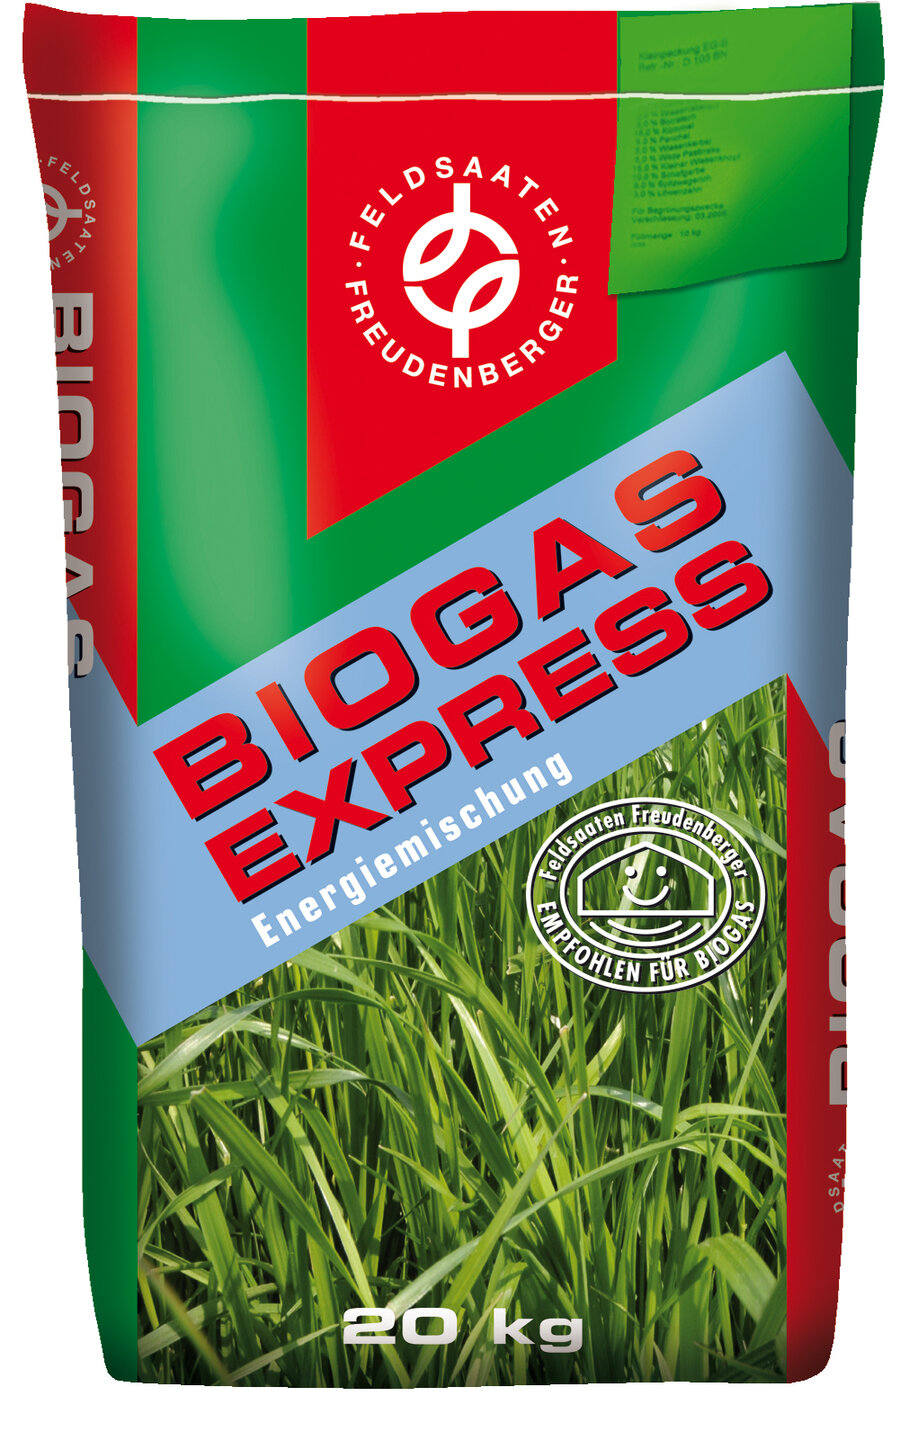 Sack_MehrGras_Biogasexpress.jpg